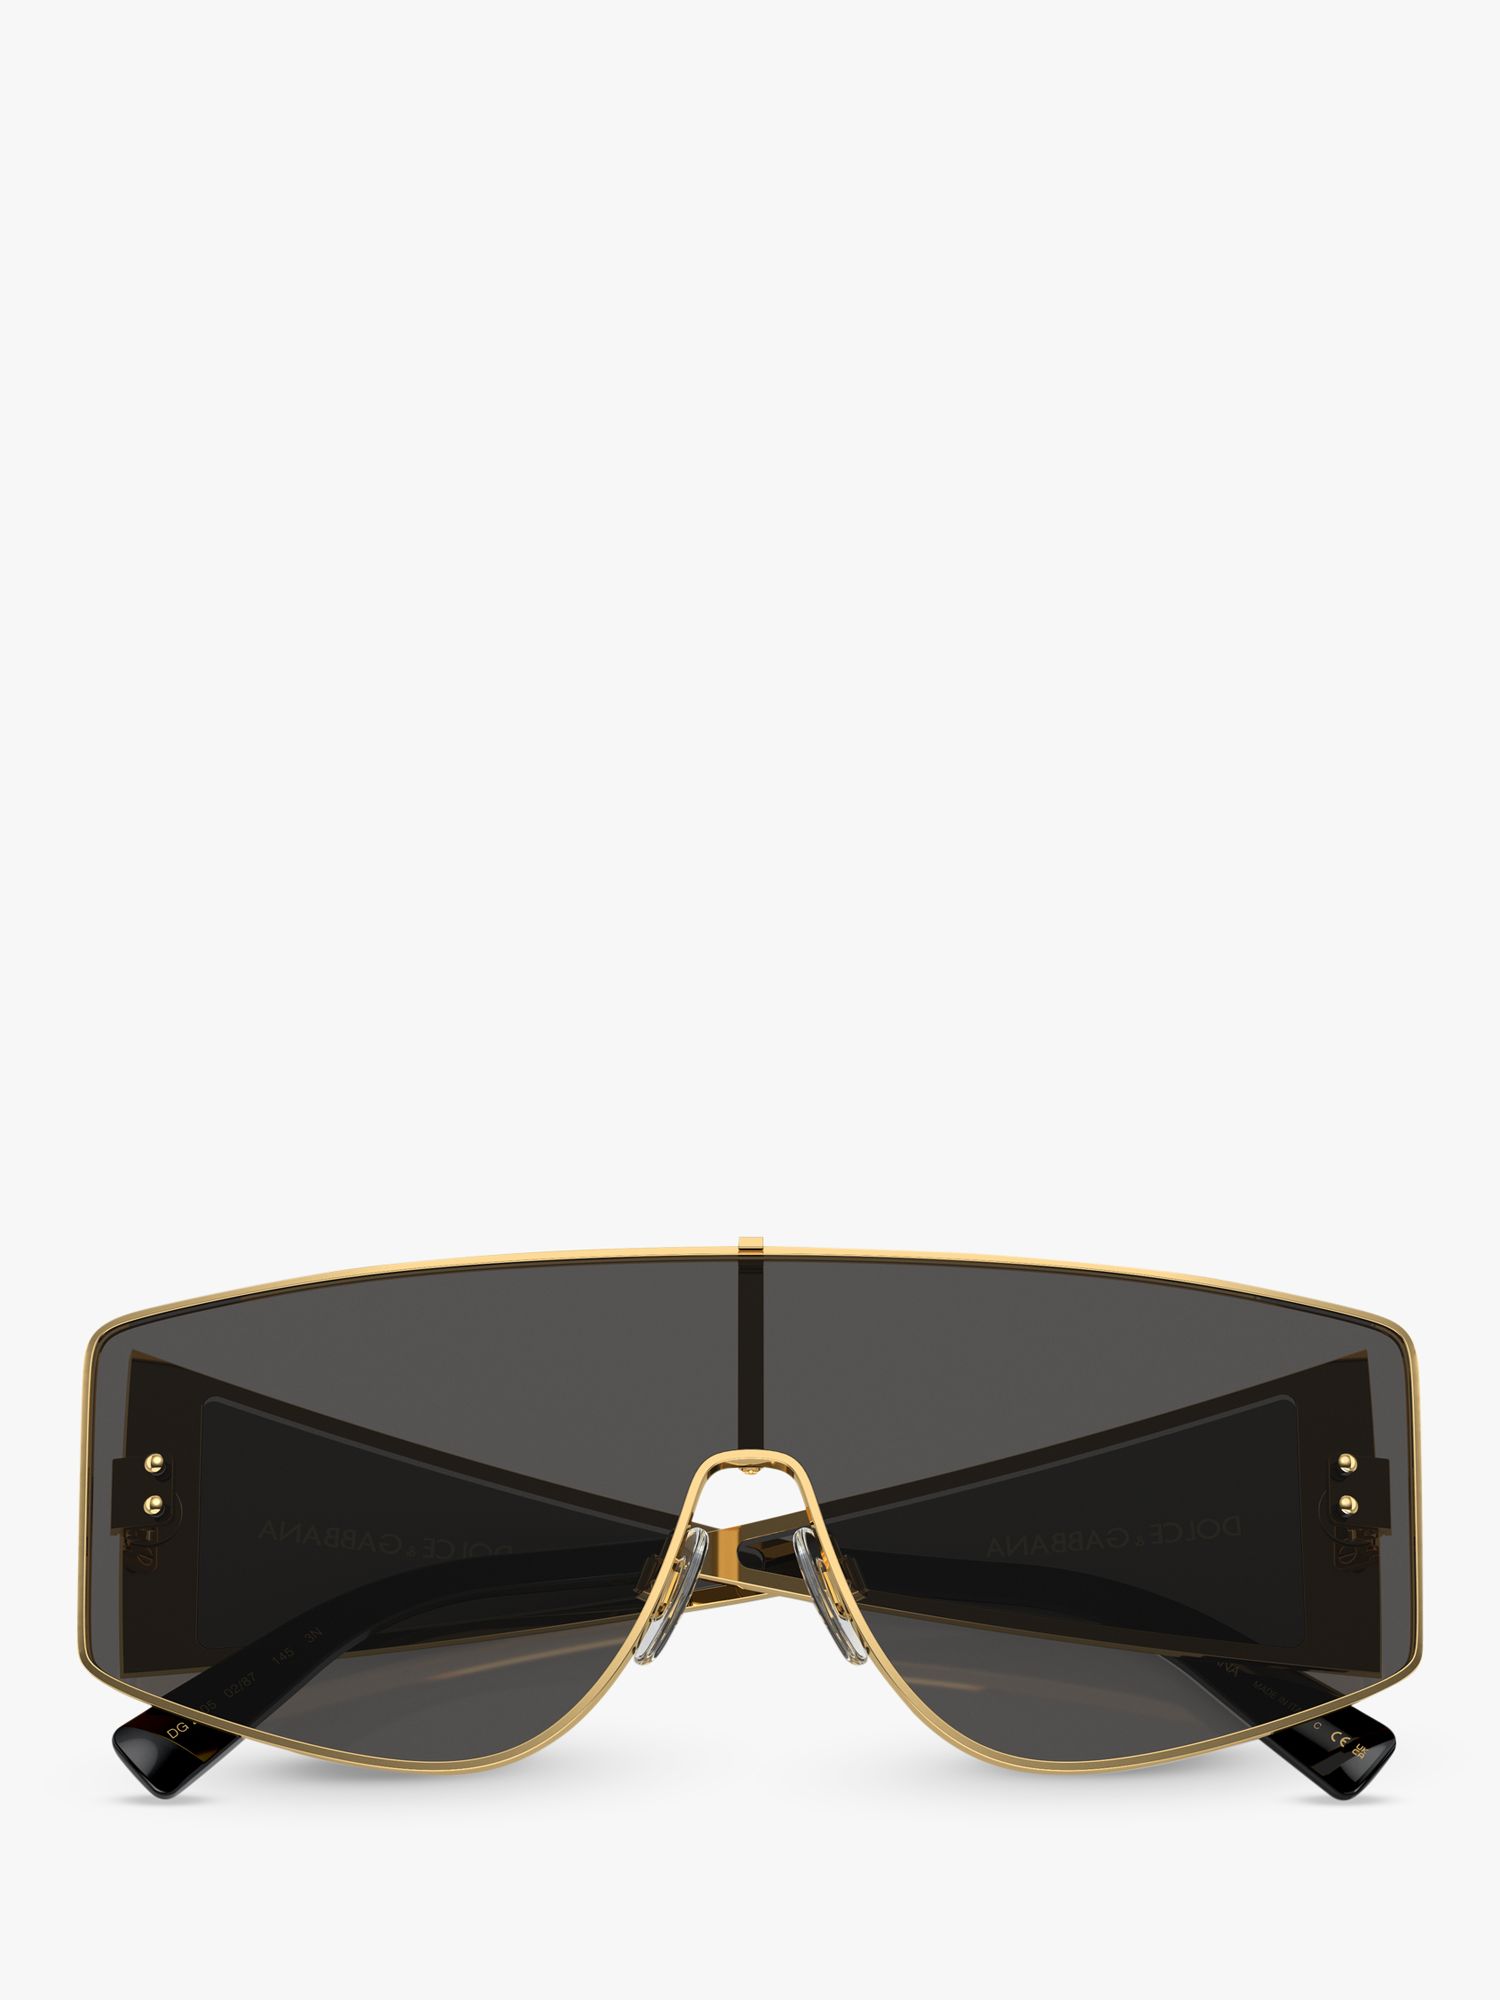 Buy Dolce & Gabbana DG2305 Men's Irregular Sunglasses Online at johnlewis.com